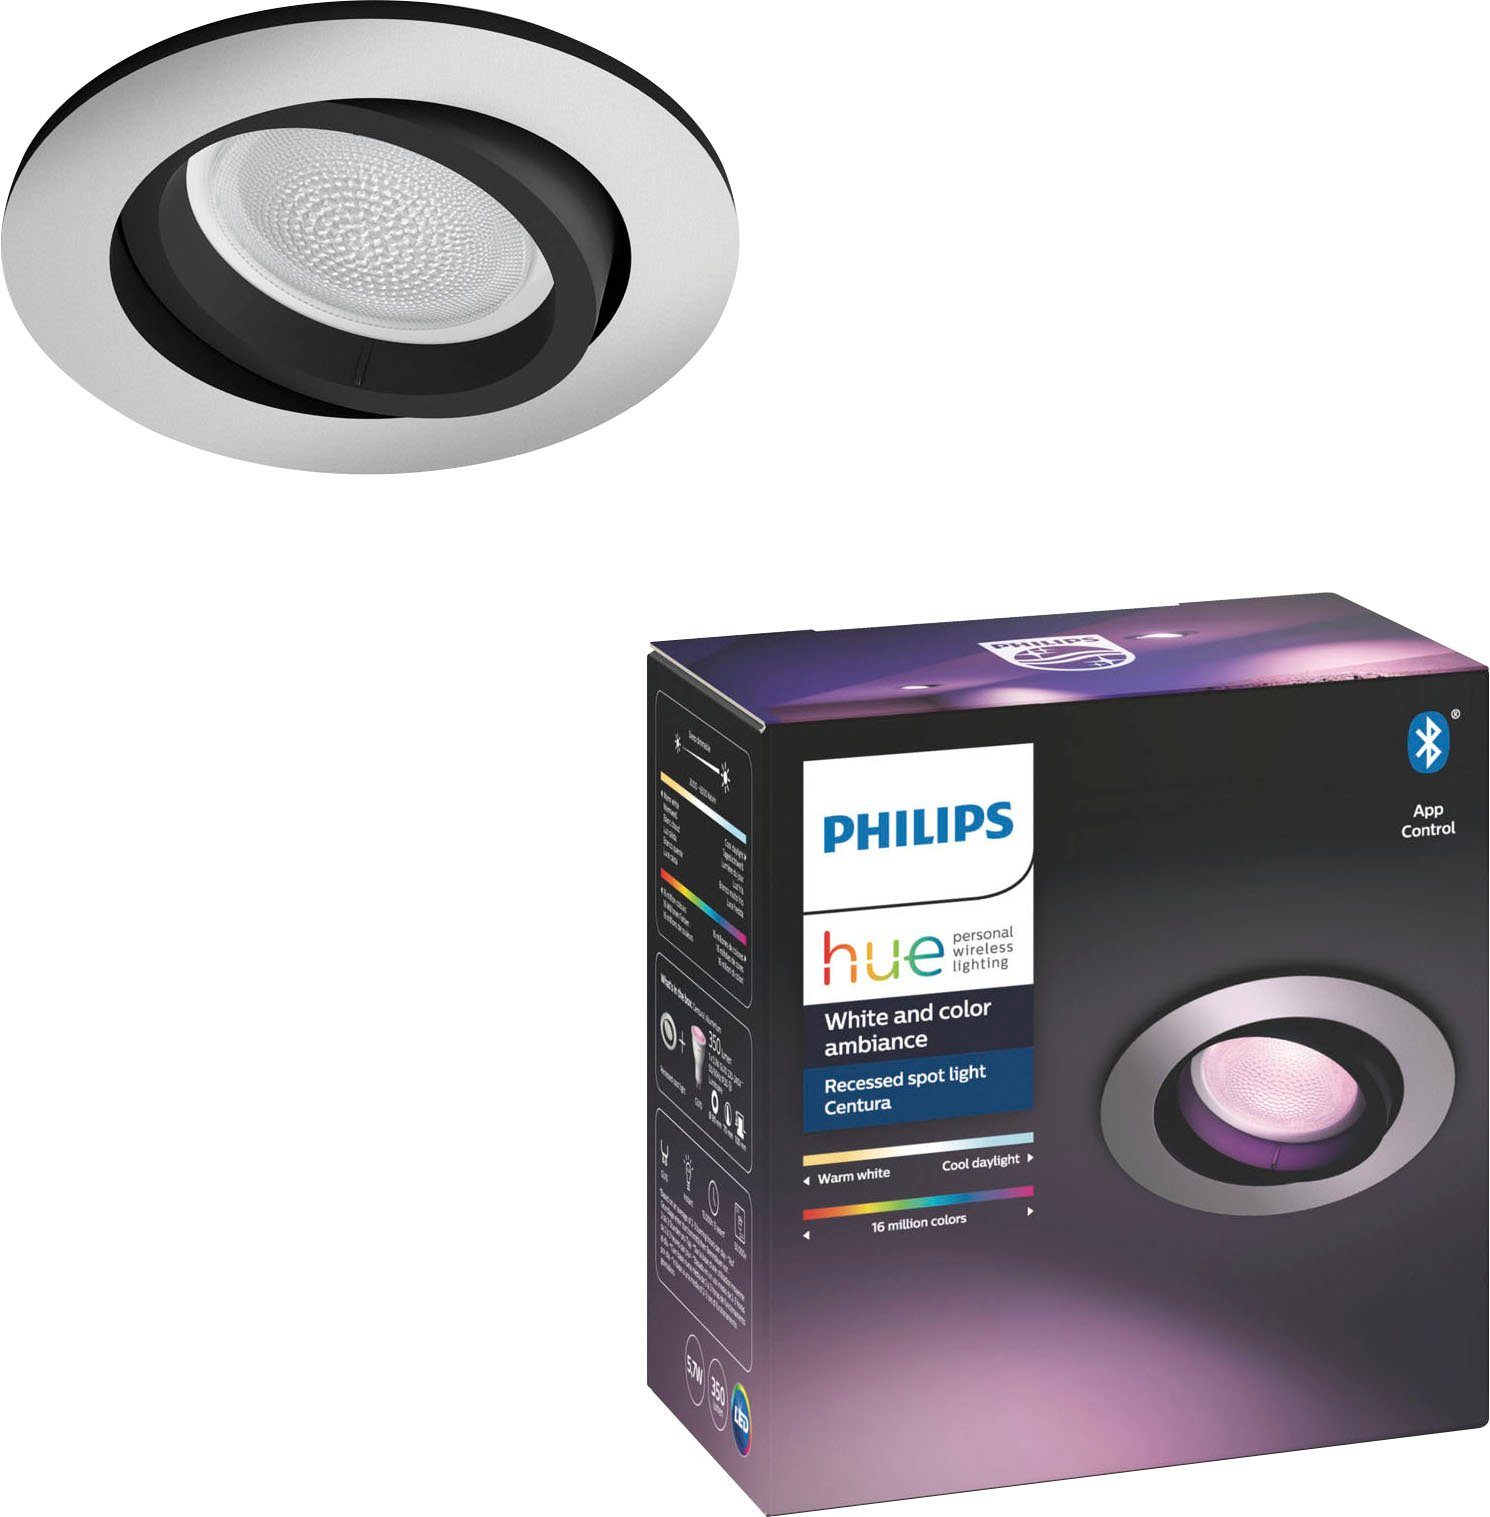 LED Centura, Hue Dimmfunktion, Philips wechselbar, Flutlichtstrahler Farbwechsler Leuchtmittel